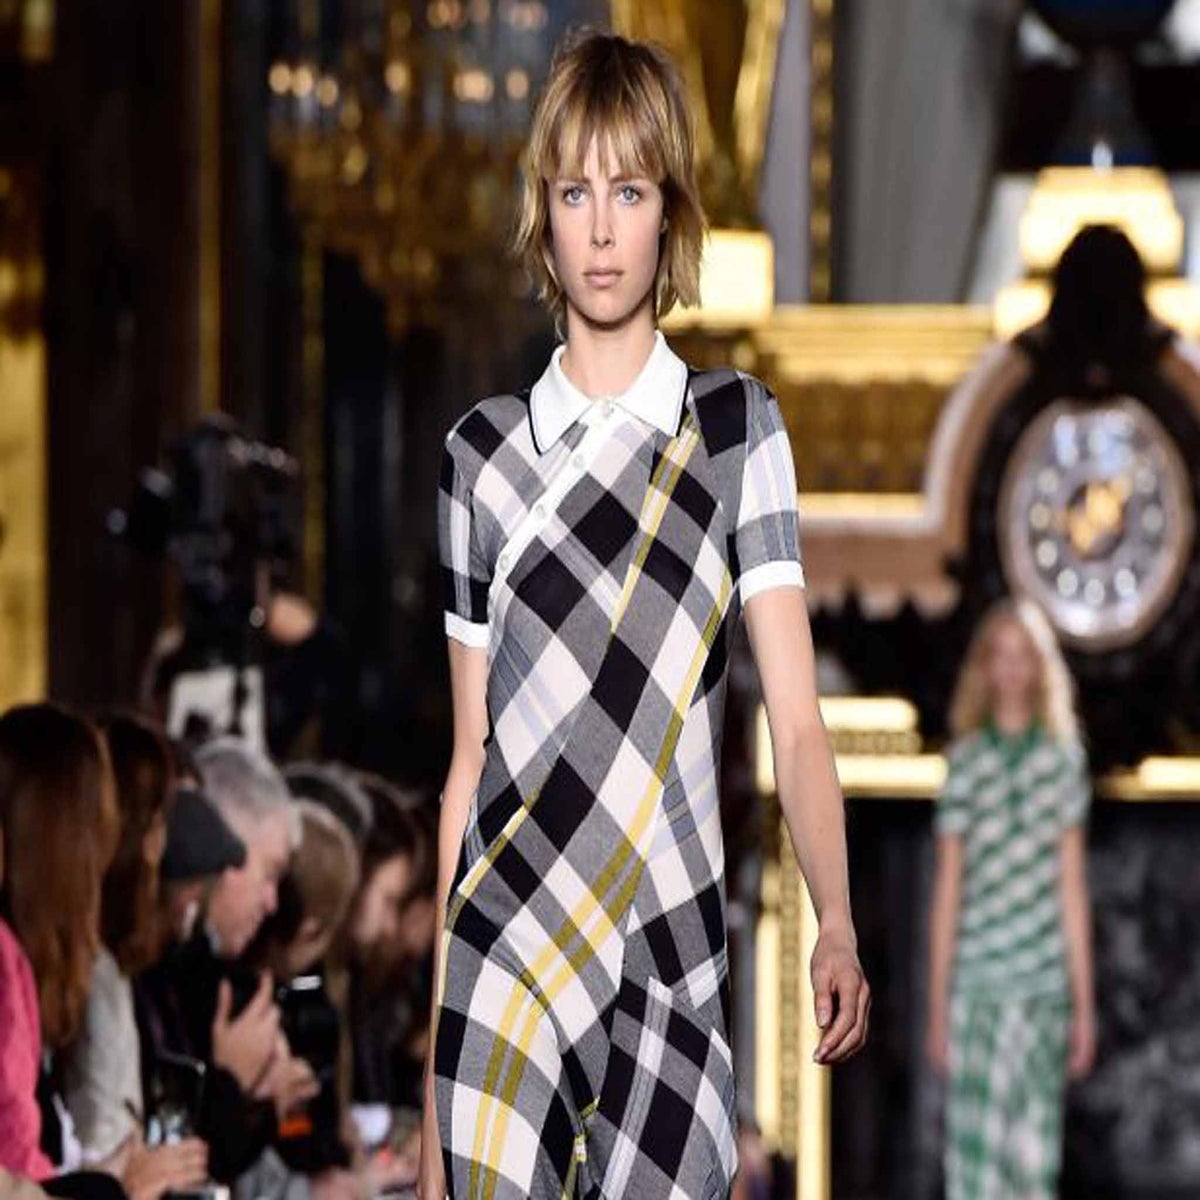 Stella McCartney: 'There aren't enough women in fashion